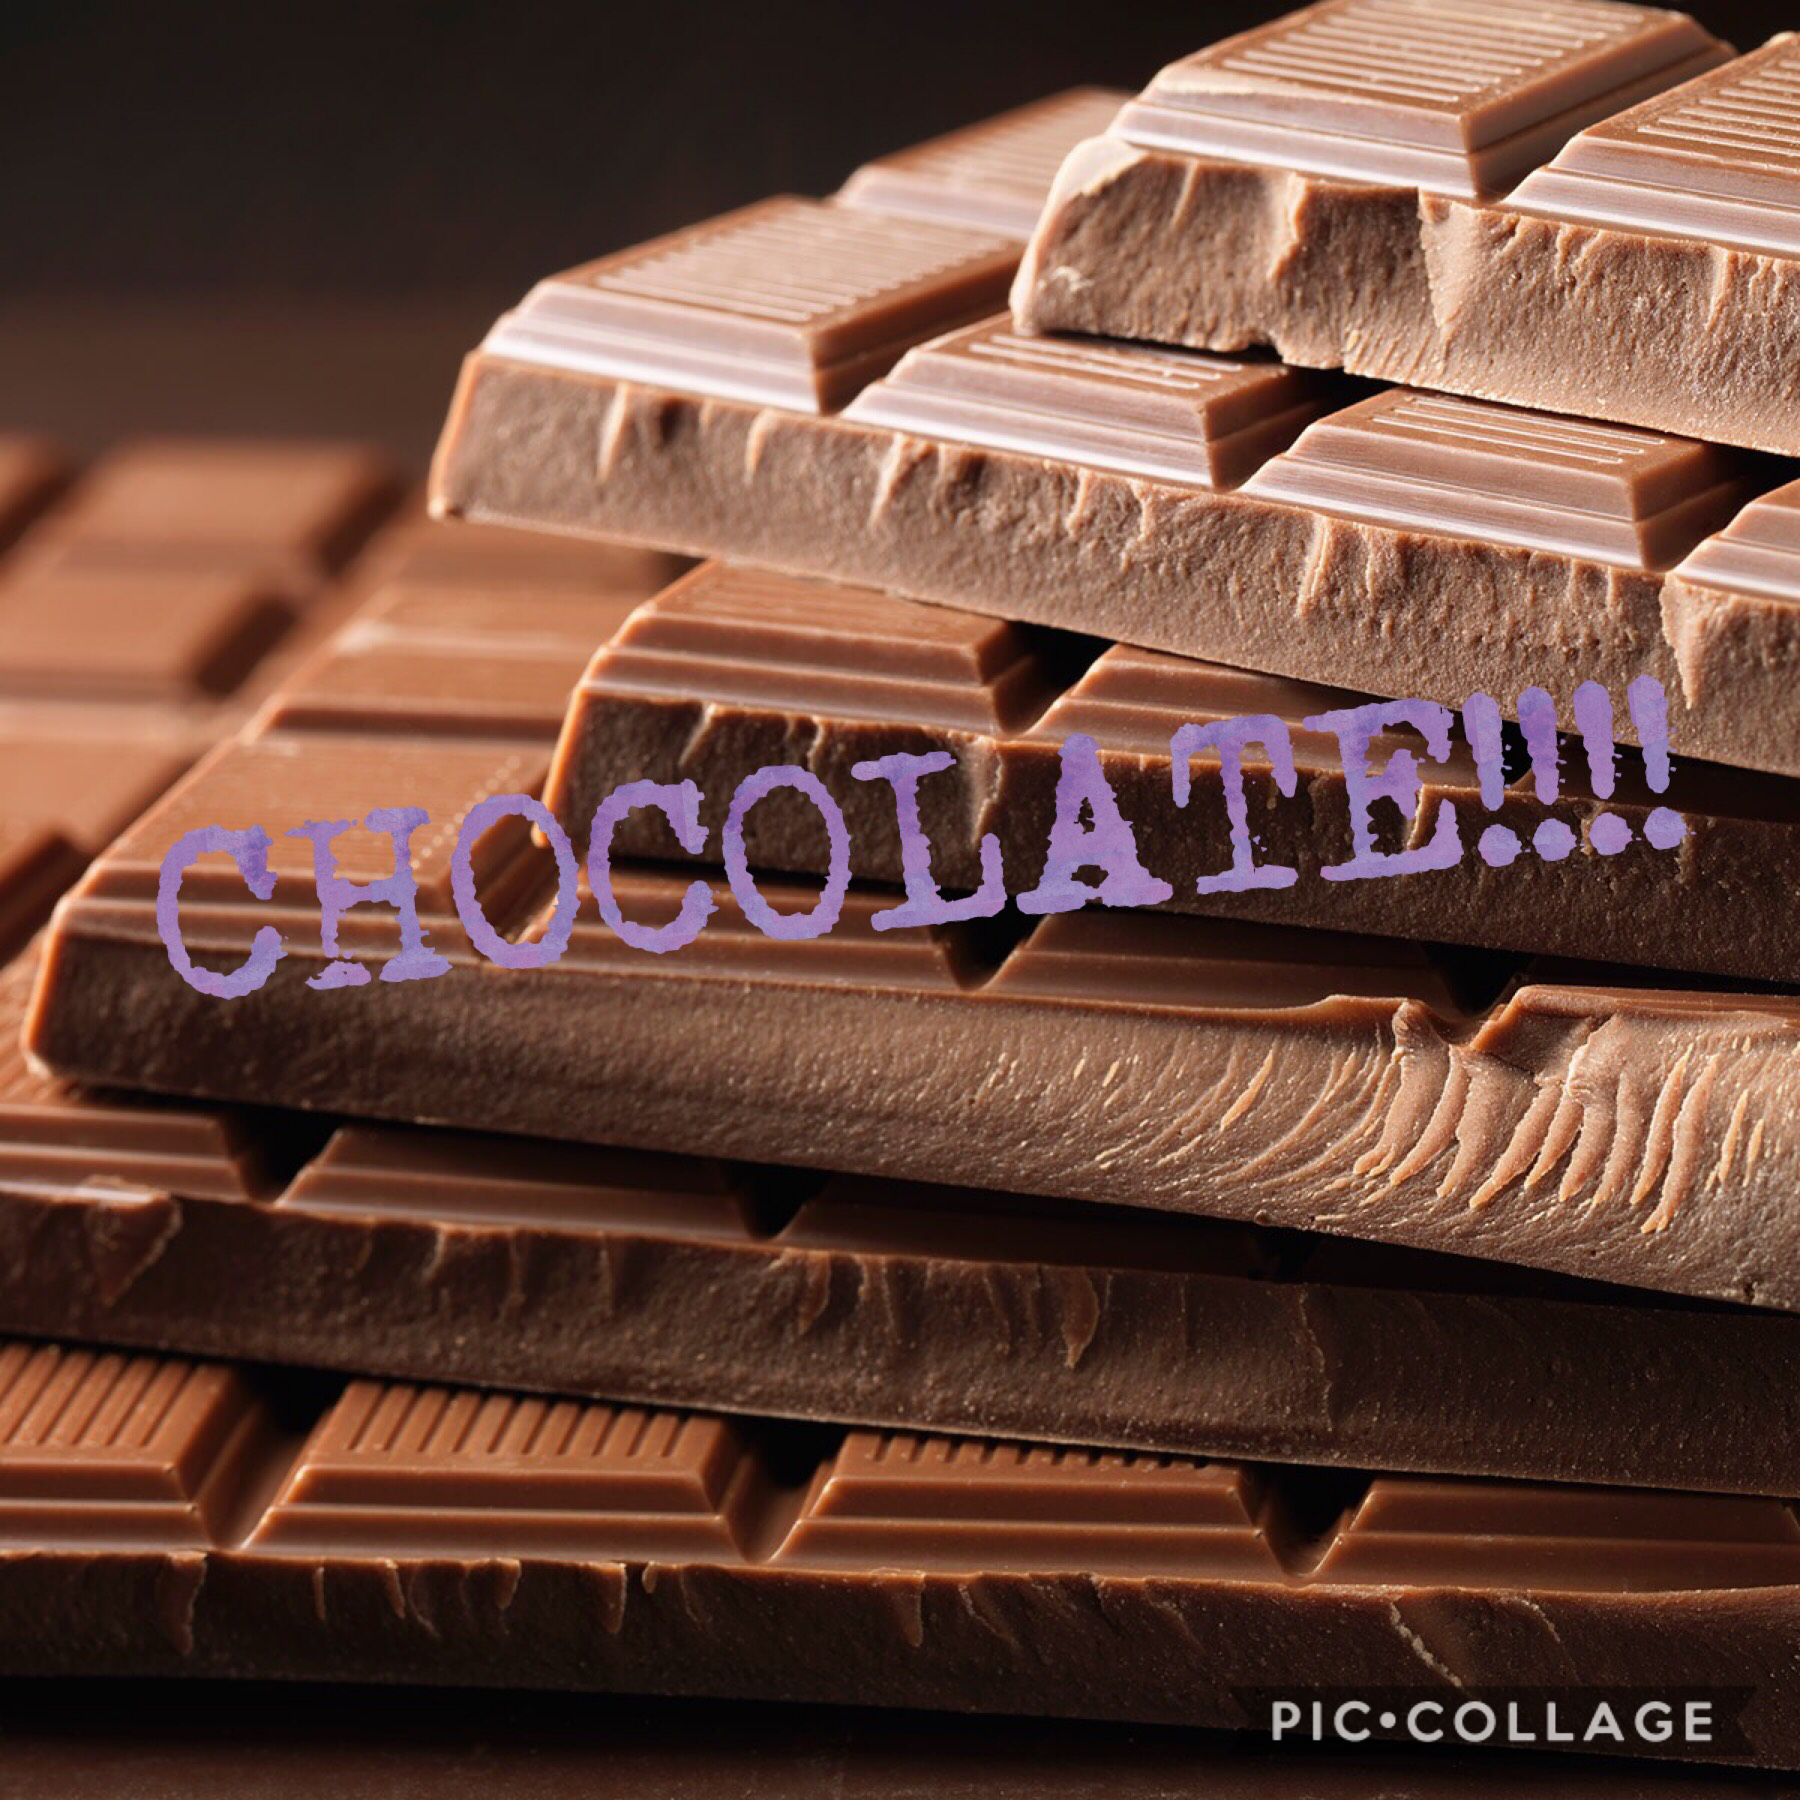 I ❤️❤️❤️❤️❤️❤️❤️❤️❤️❤️❤️❤️ chocolate!